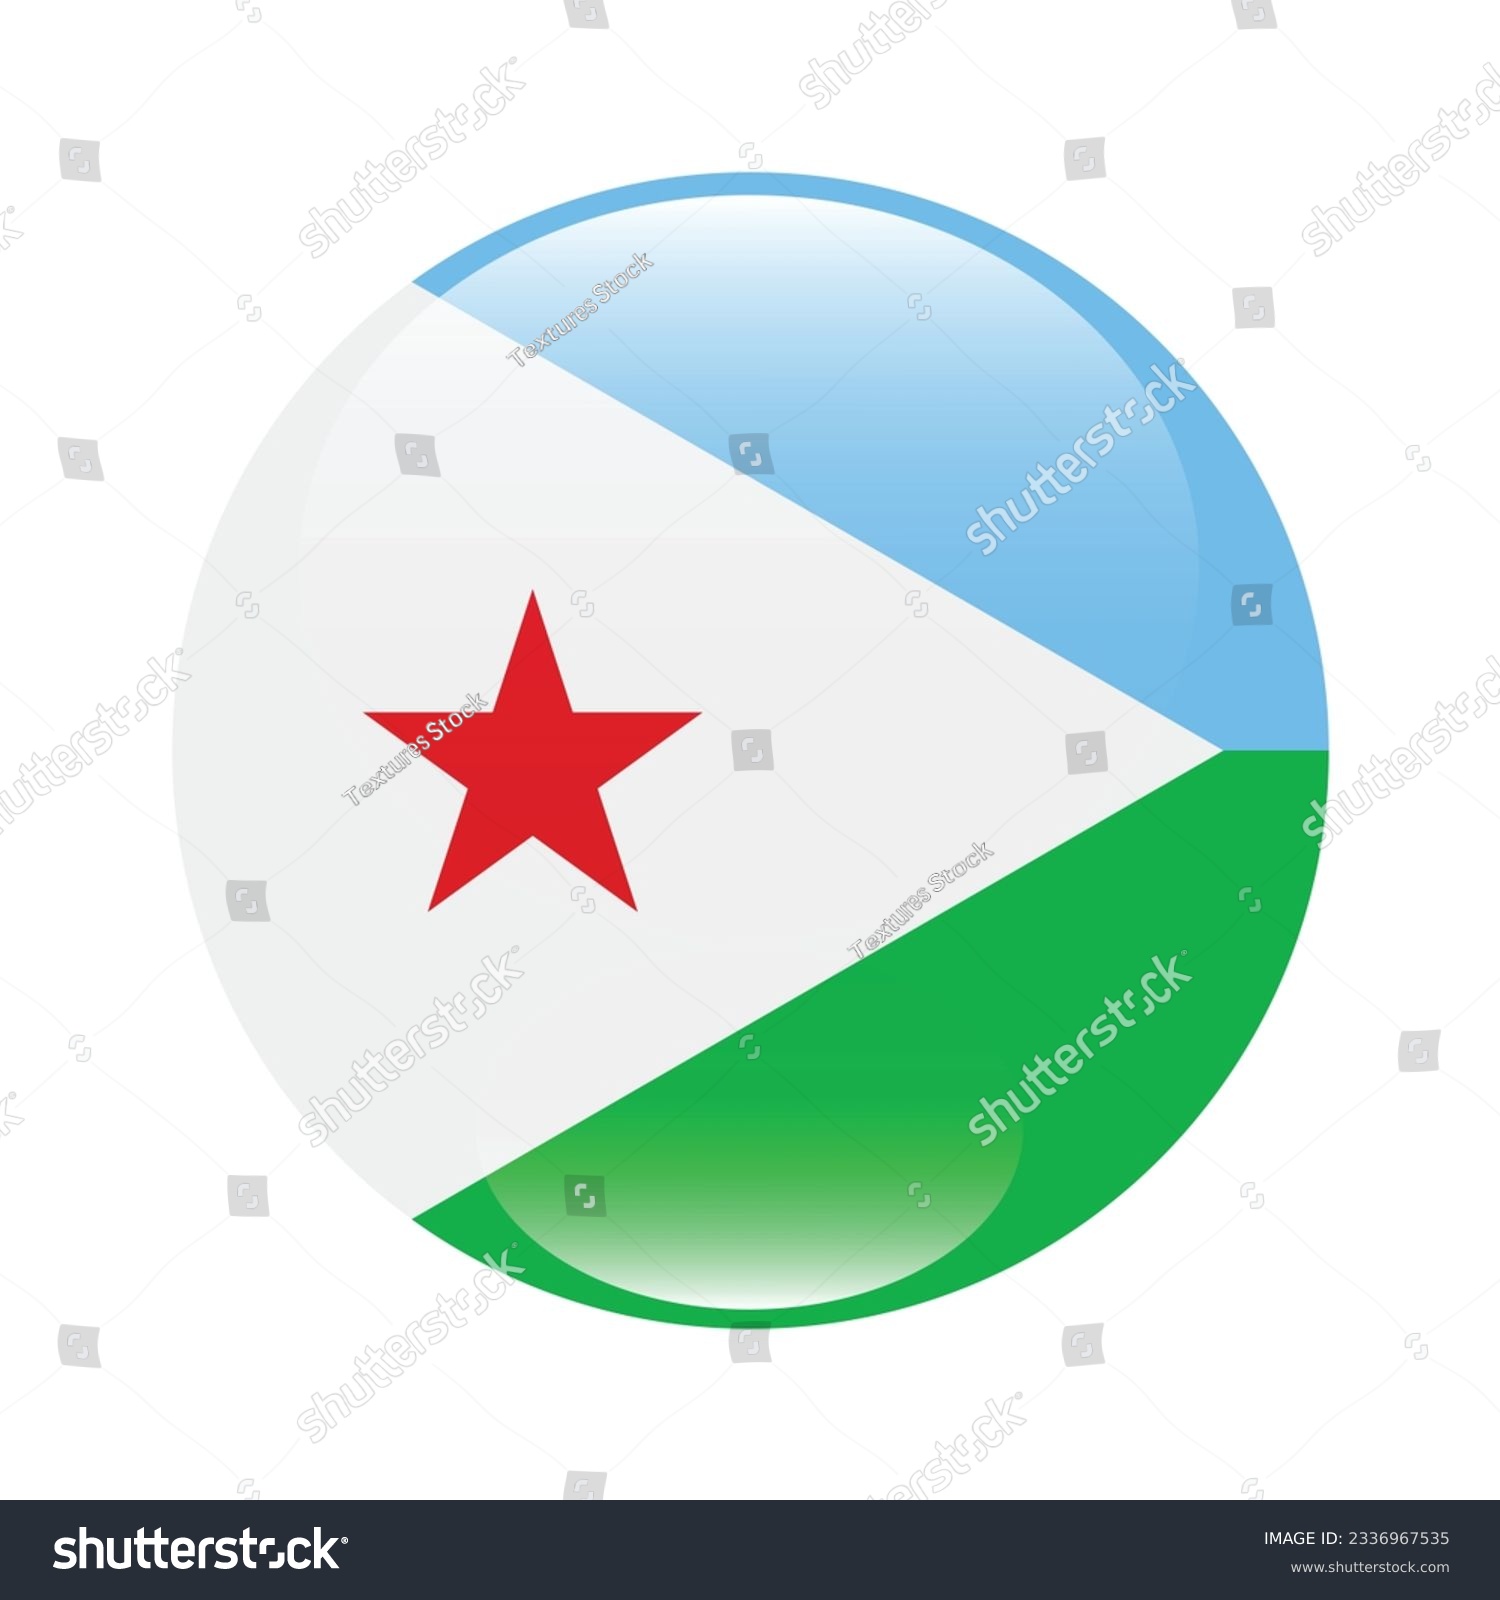 SVG of Flag of Djibouti. Flag icon. Standard color. Circle icon flag. 3d illustration. Computer illustration. Digital illustration. Vector illustration. svg